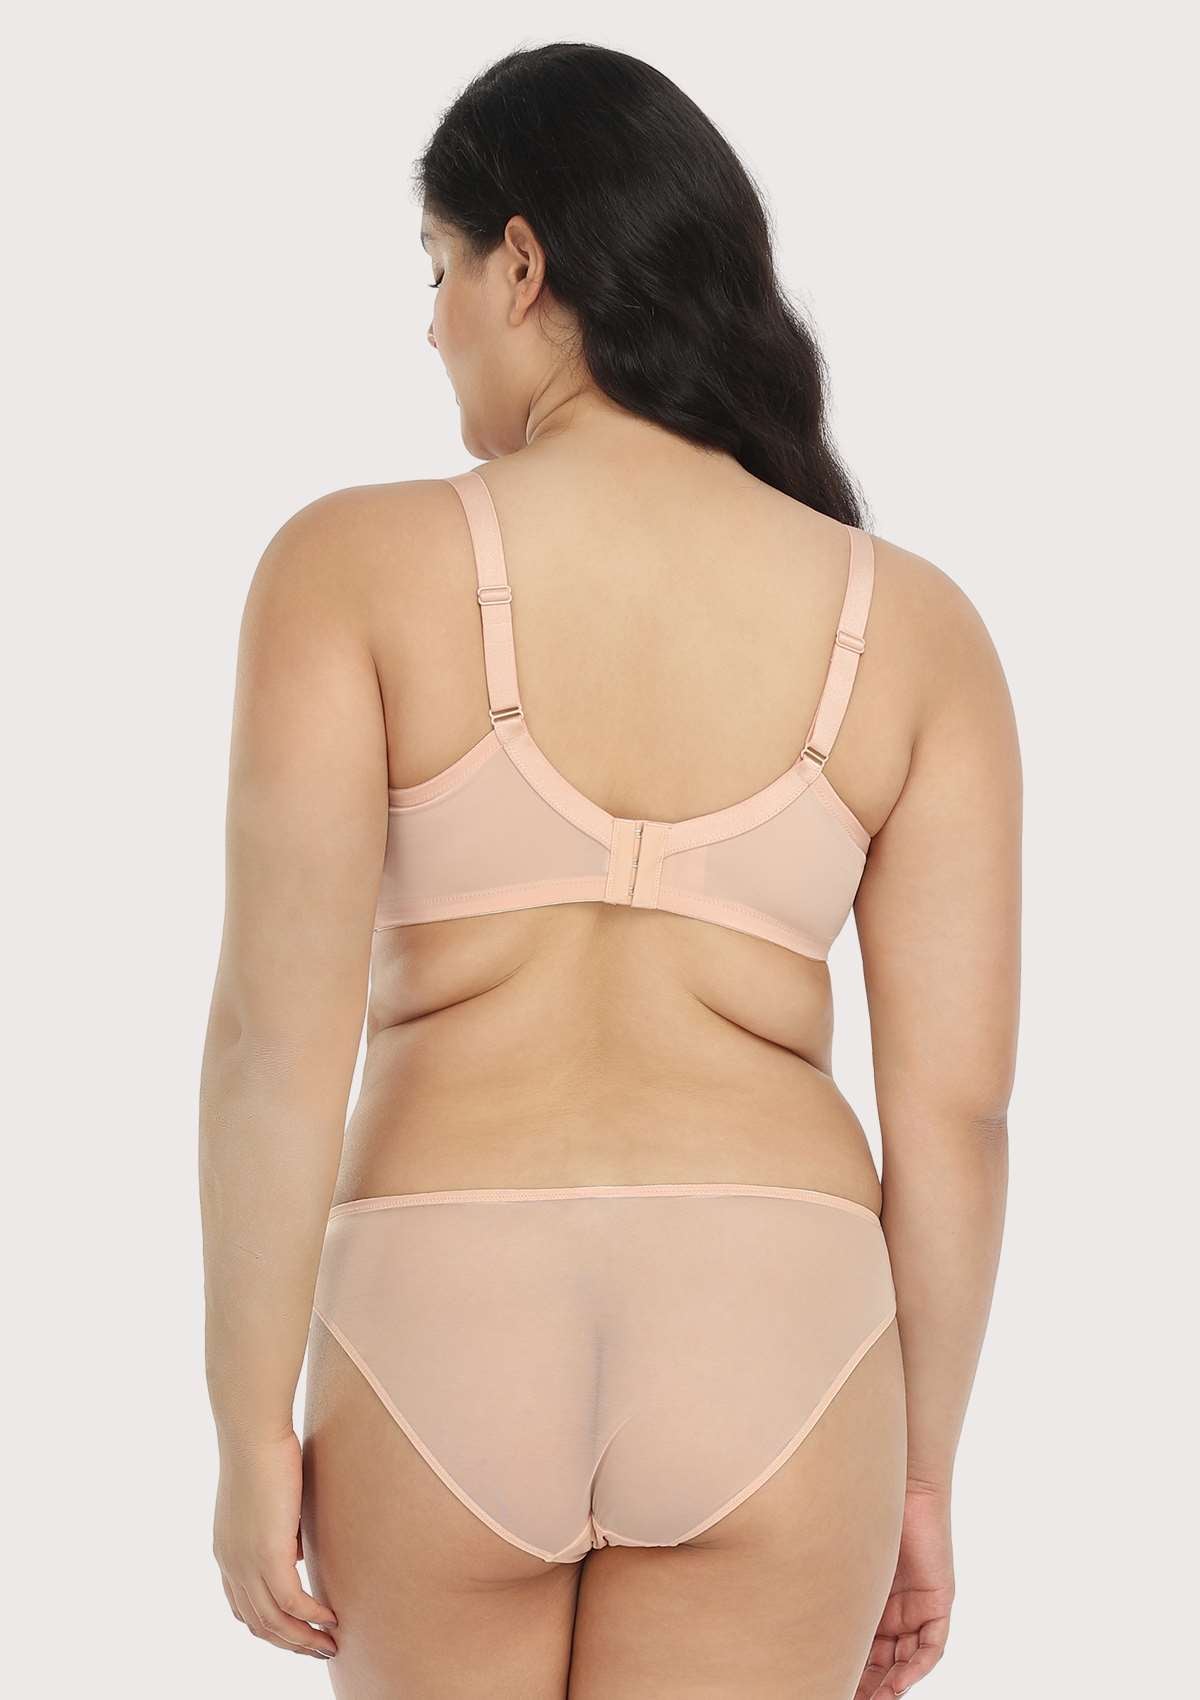 HSIA Sunflower Matching Bra And Panties Set: Comfortable Plus Size Bra - Pink / 38 / H